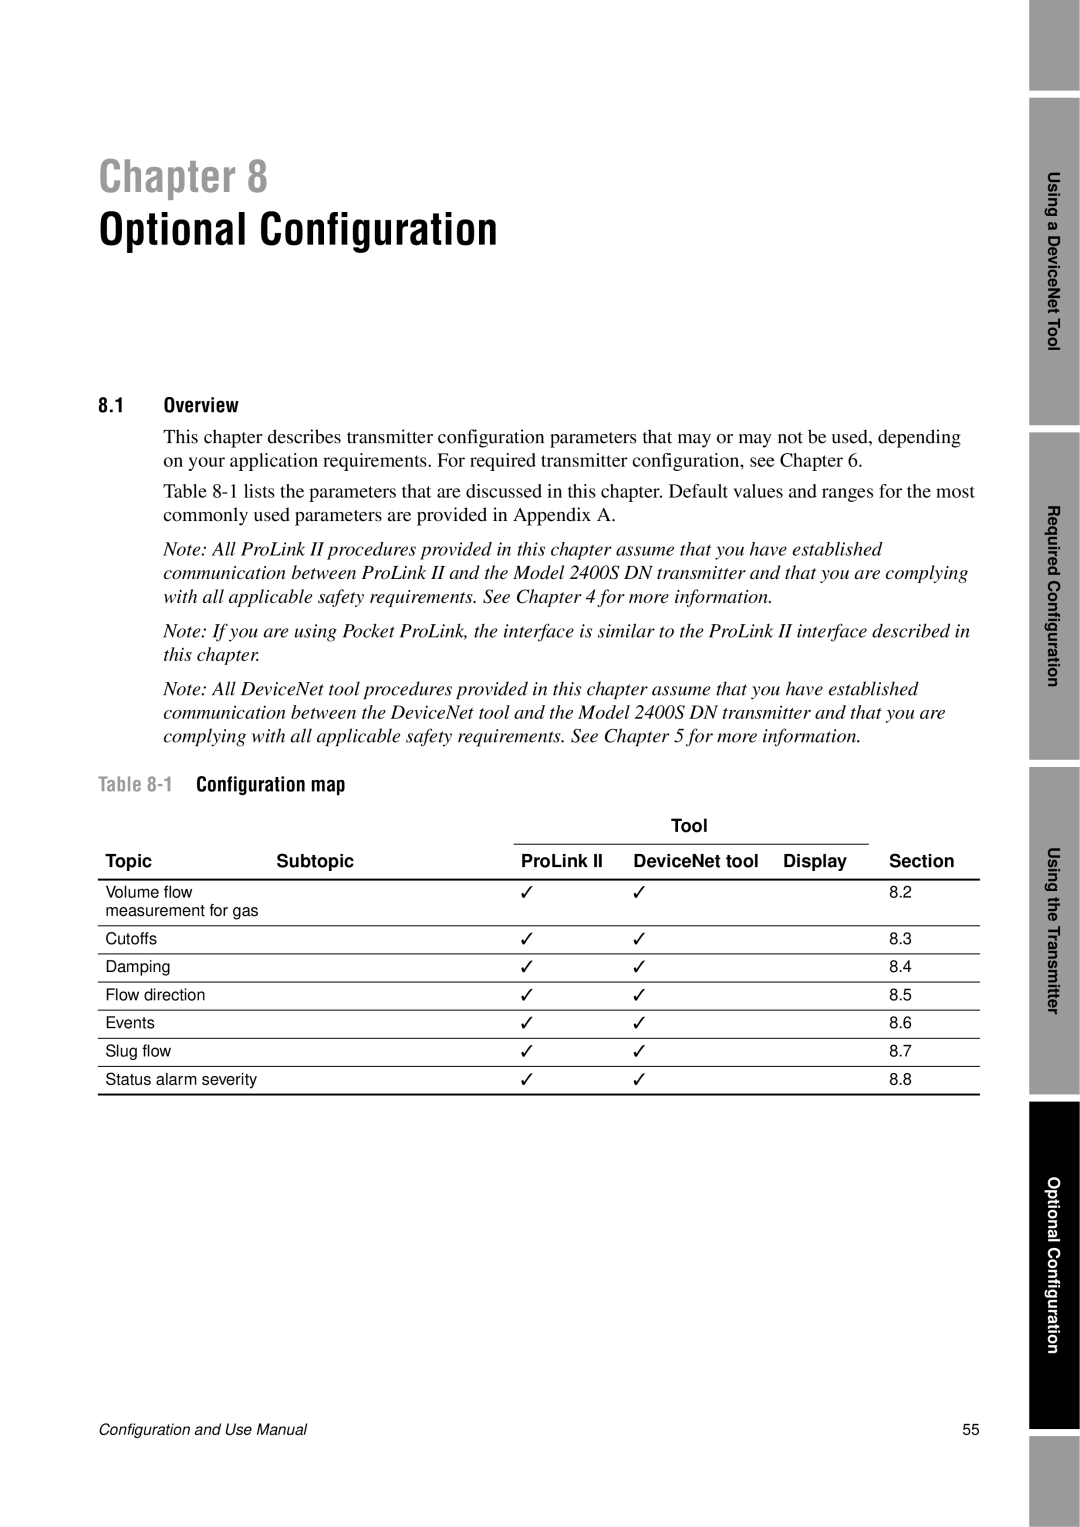 Emerson Process Management 2400S manual Optional Configuration, Chapter, 8.1Overview, 1 Configuration map 